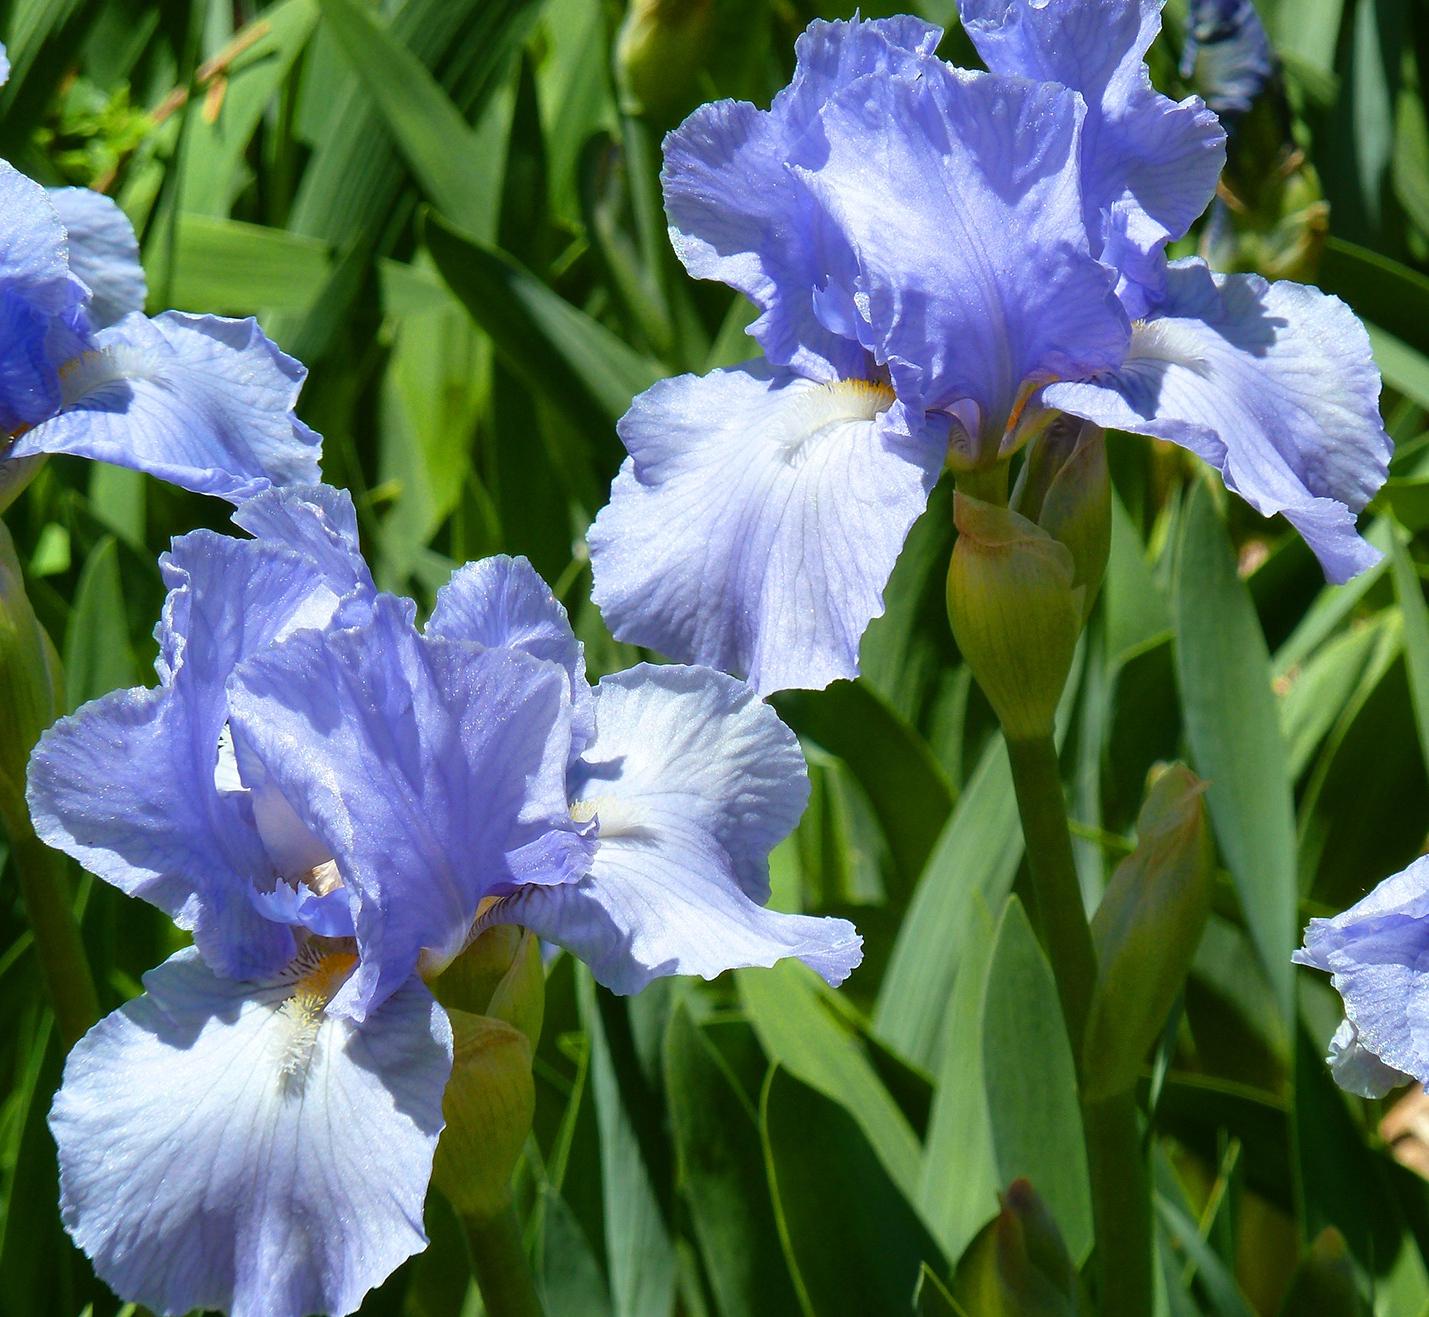 Iris Germanica 'Victoria Falls' - Tall Bearded Iris from Leo Berbee Bulb Company